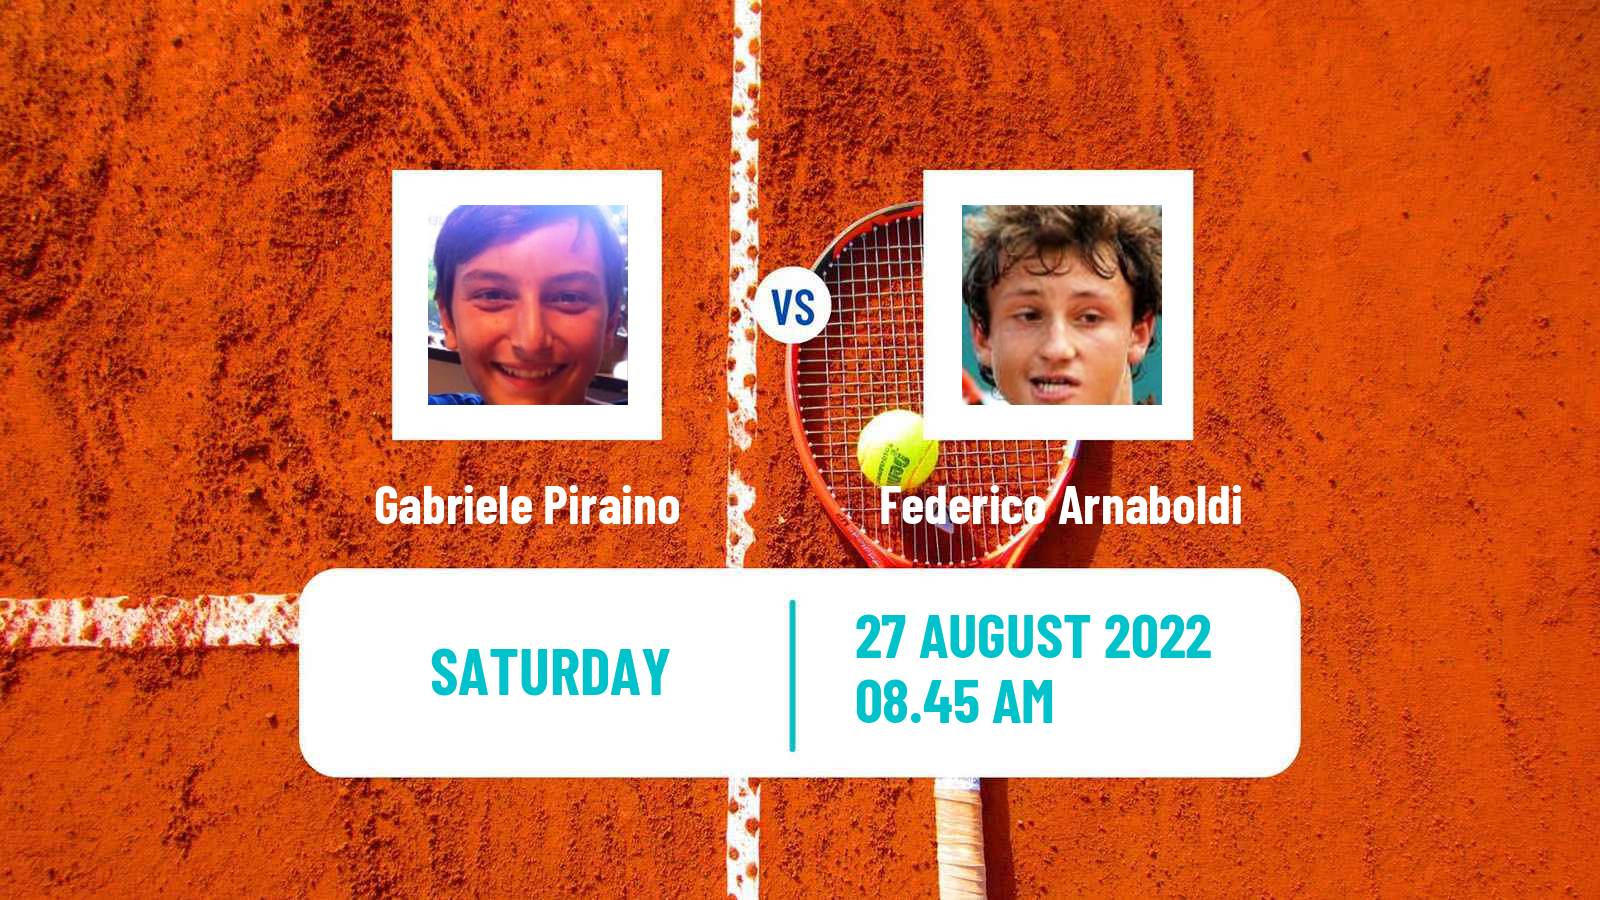 Tennis ITF Tournaments Gabriele Piraino - Federico Arnaboldi